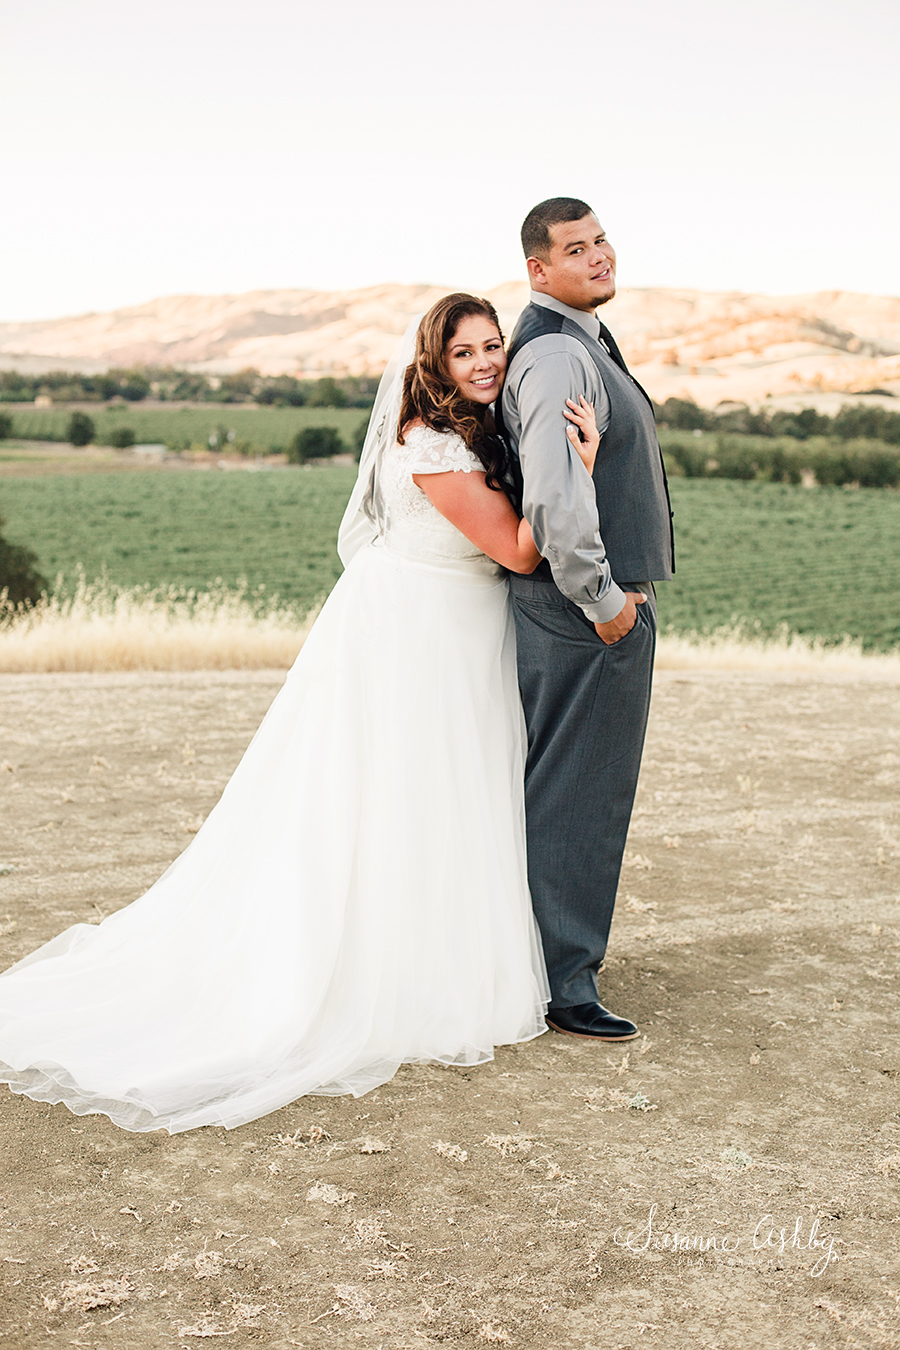 Taber Ranch Capay Northern California Wedding Photographer